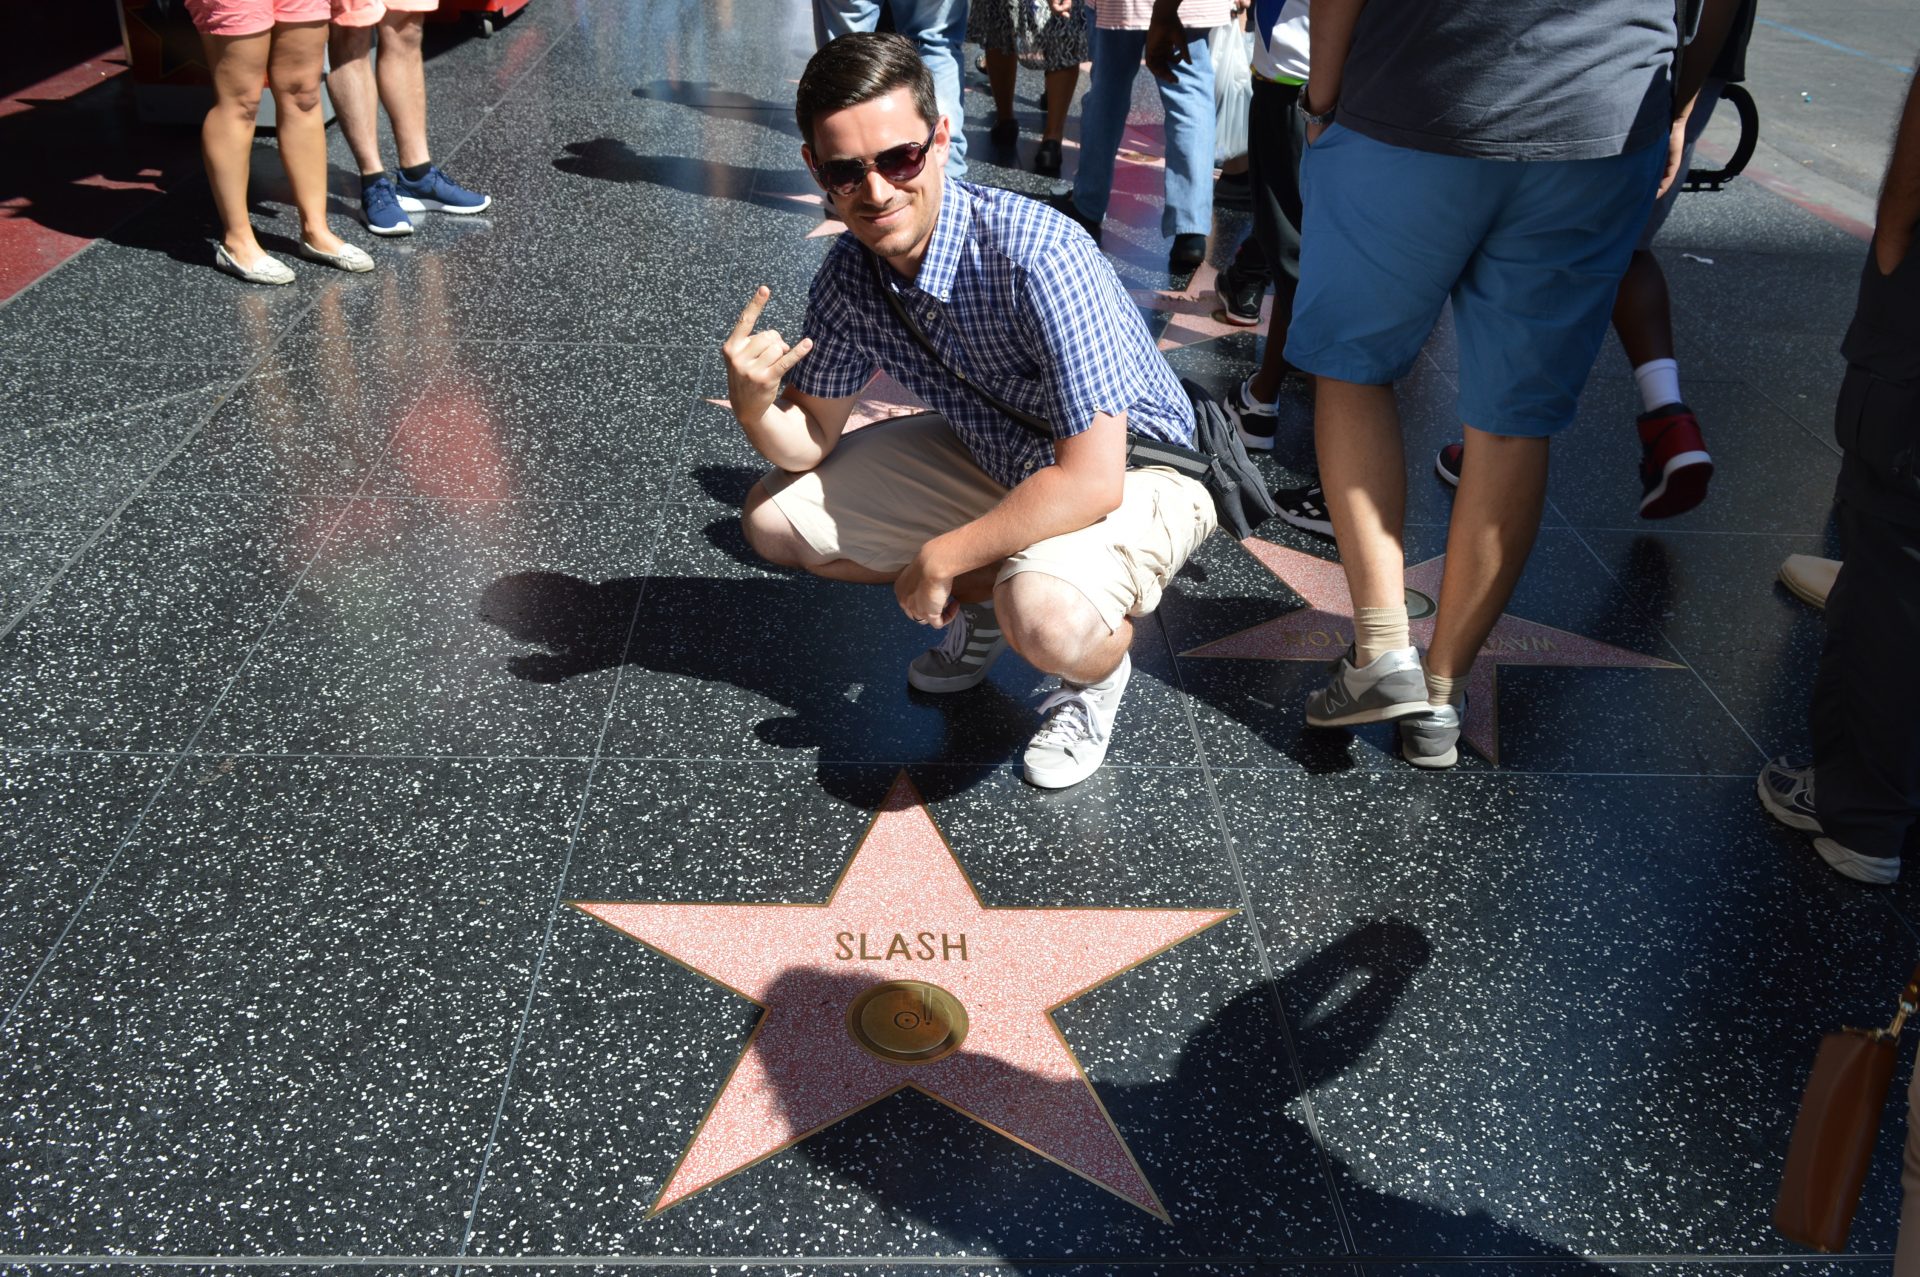 Slash's Star on the Hollywood Walk of Fame